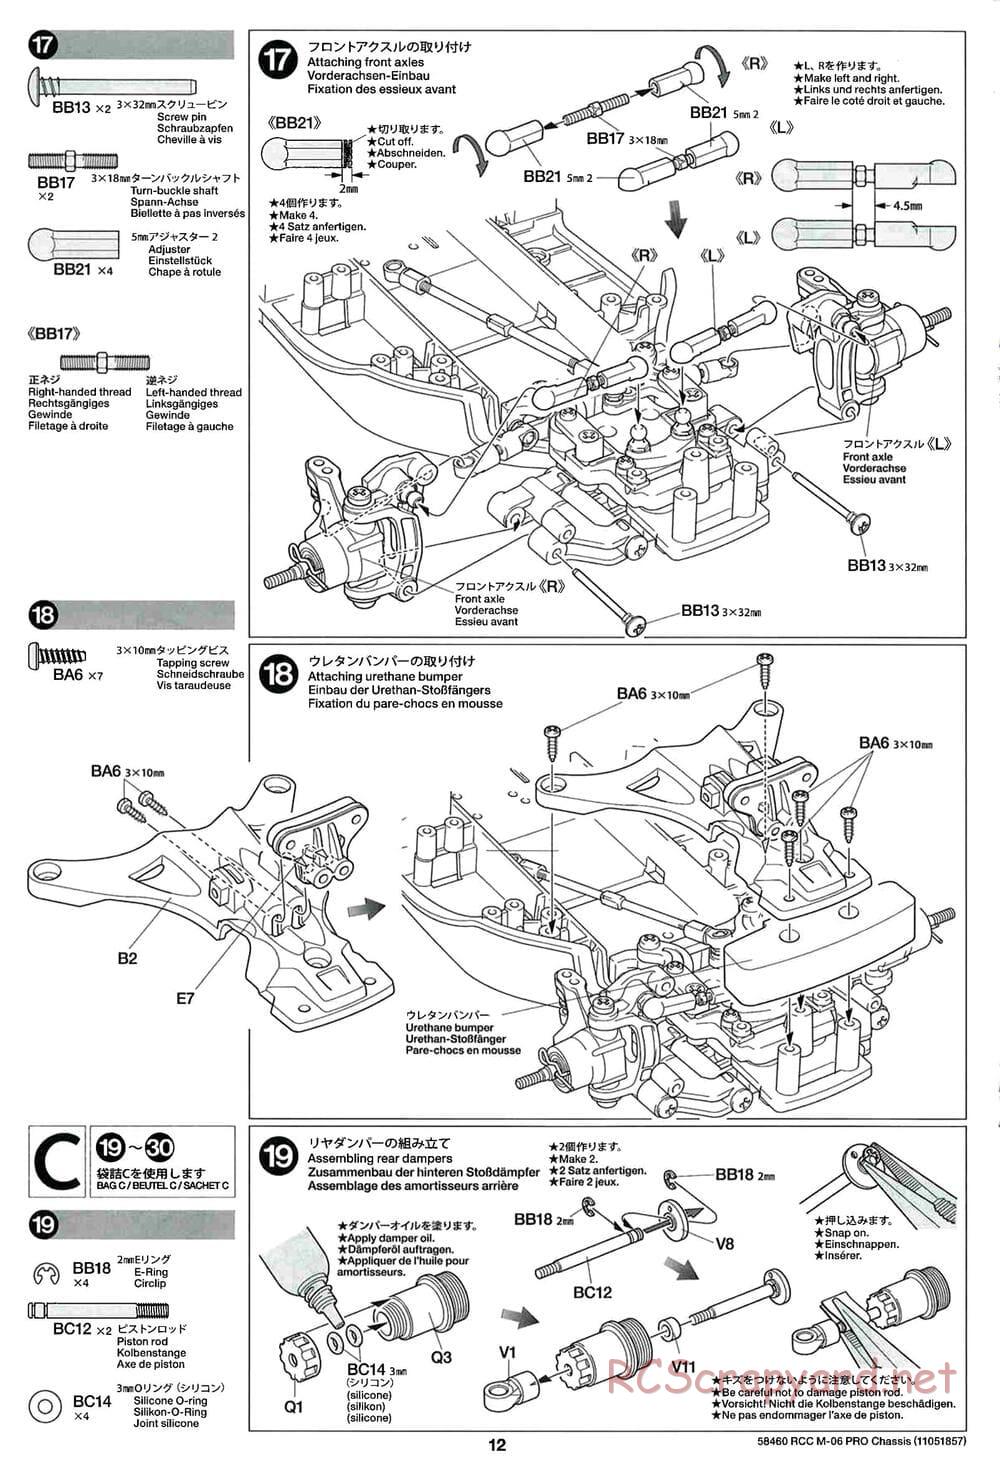 Tamiya - M-06 Pro Chassis - Manual - Page 12